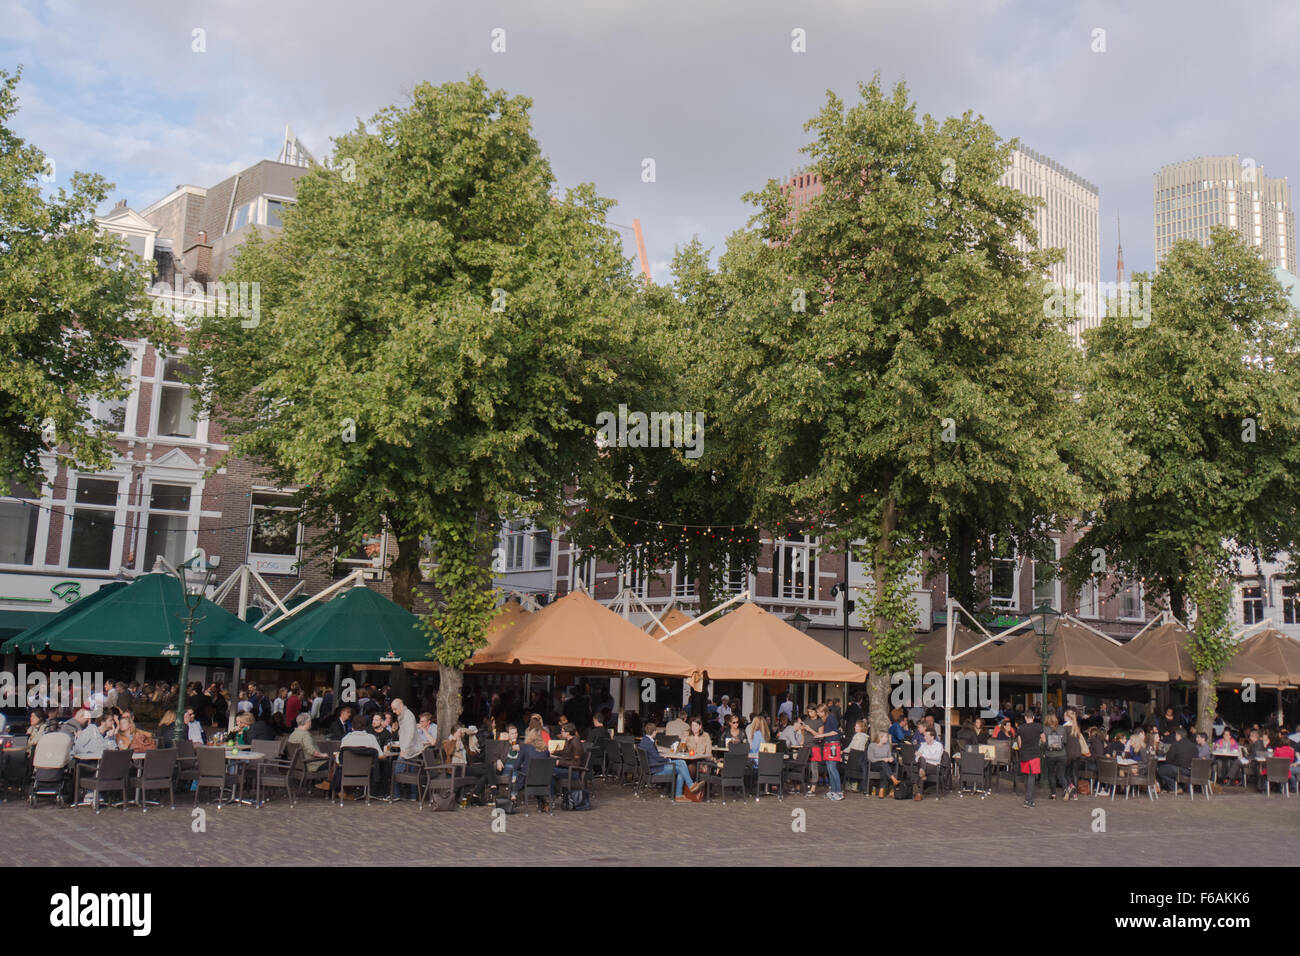 Het Plein, Den Haag, The Square den Haag, Niederlande - Profis genießen soziale After-Work-drinks Stockfoto